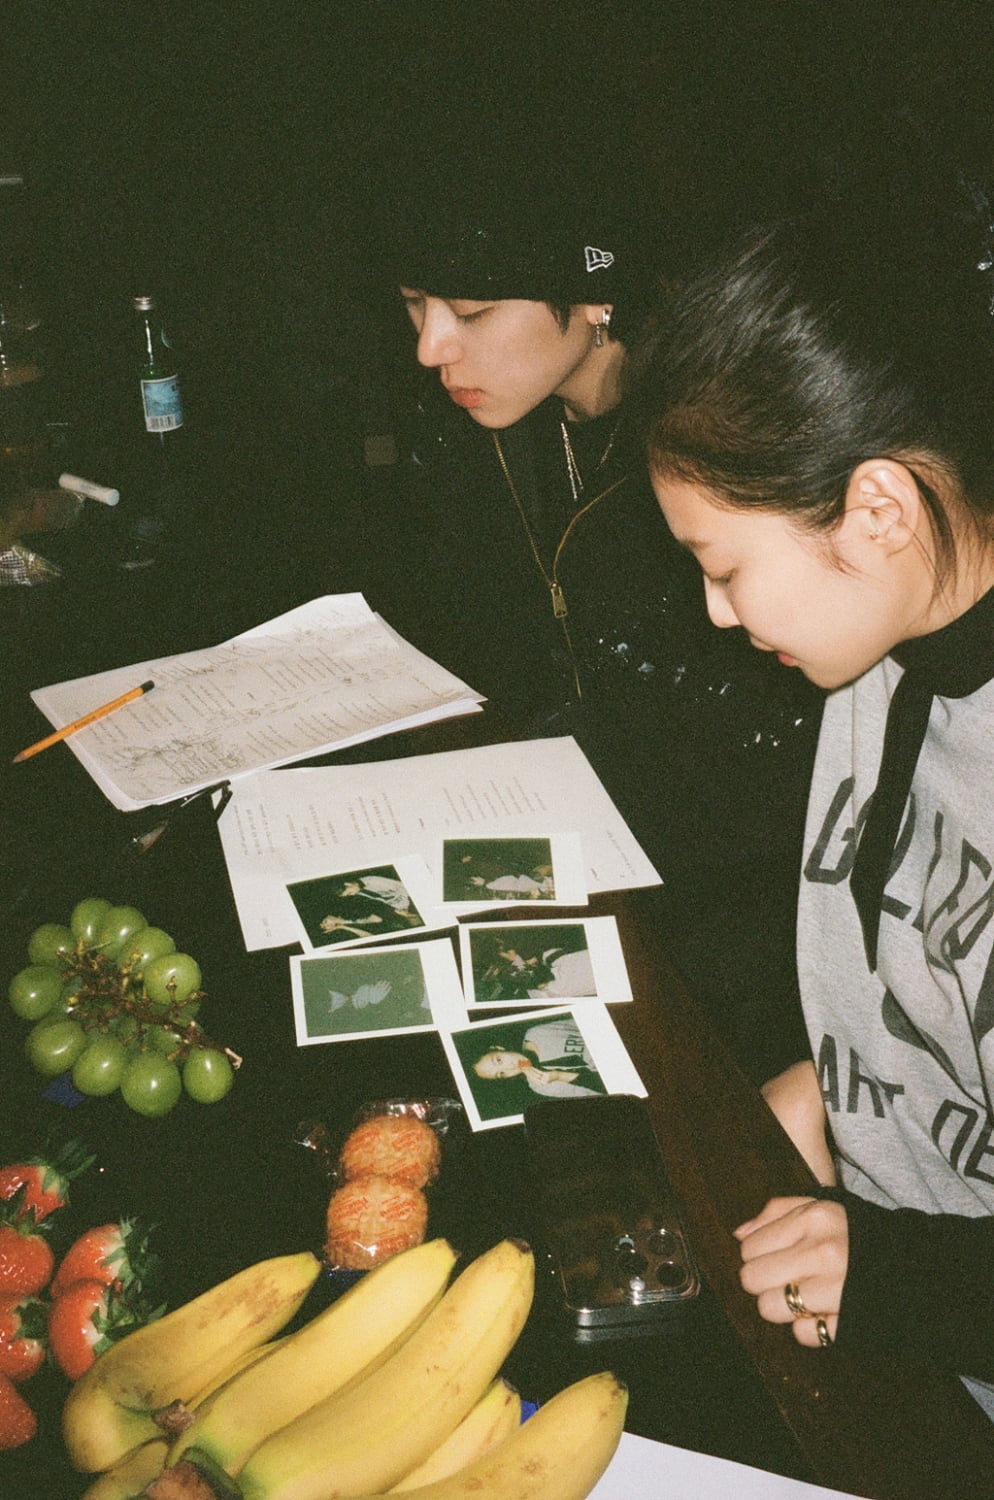 Zico and Jennie’s studio snacks are strawberries and bananas